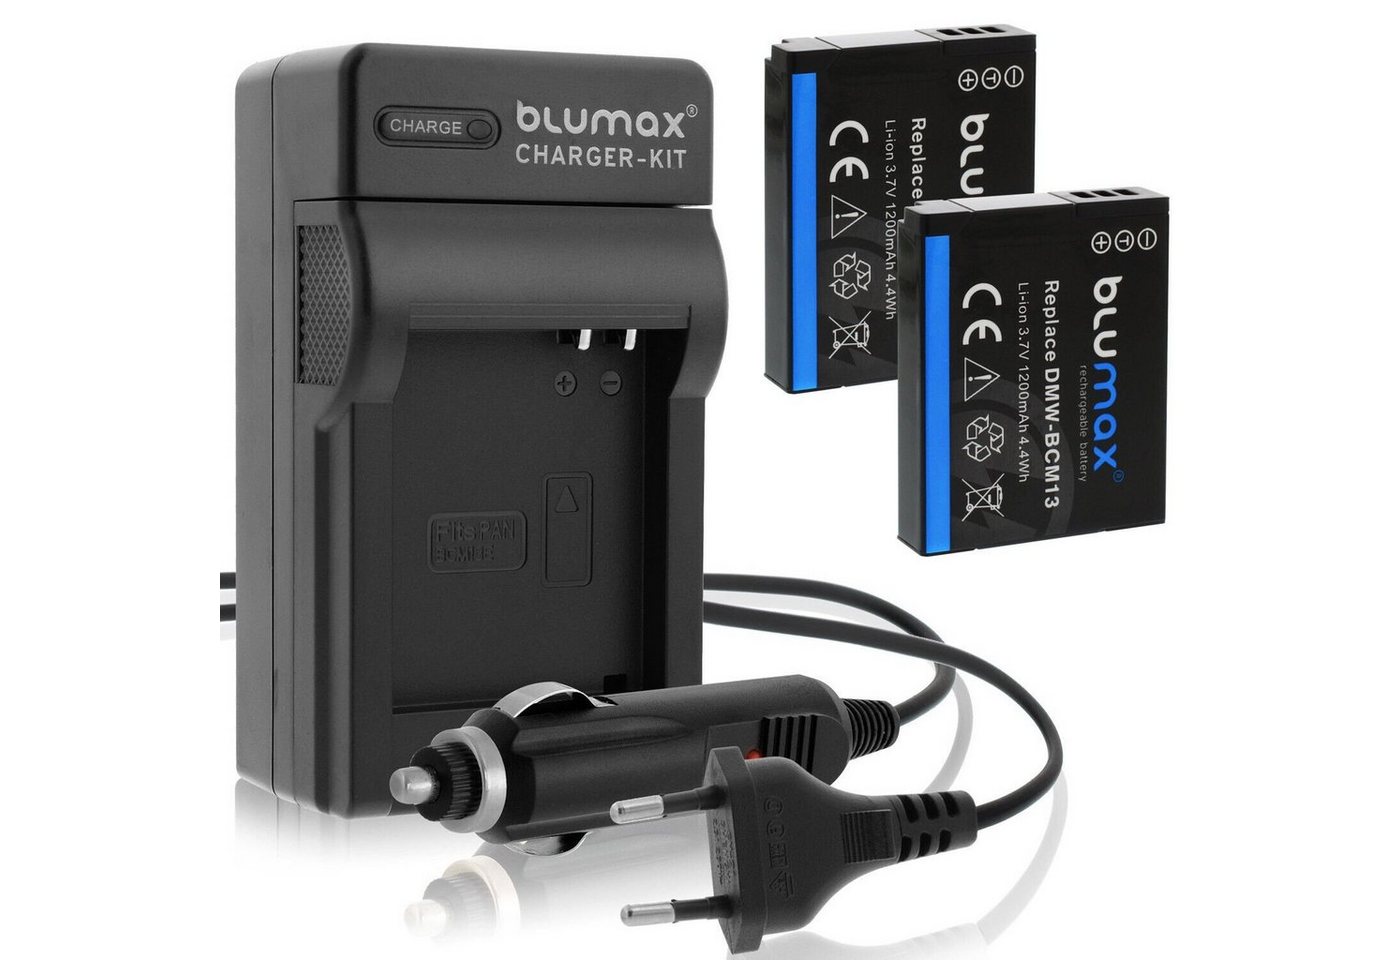 Blumax Set mit Lader für Panasonic DMW- BCM13 1200 mAh Kamera-Akku von Blumax